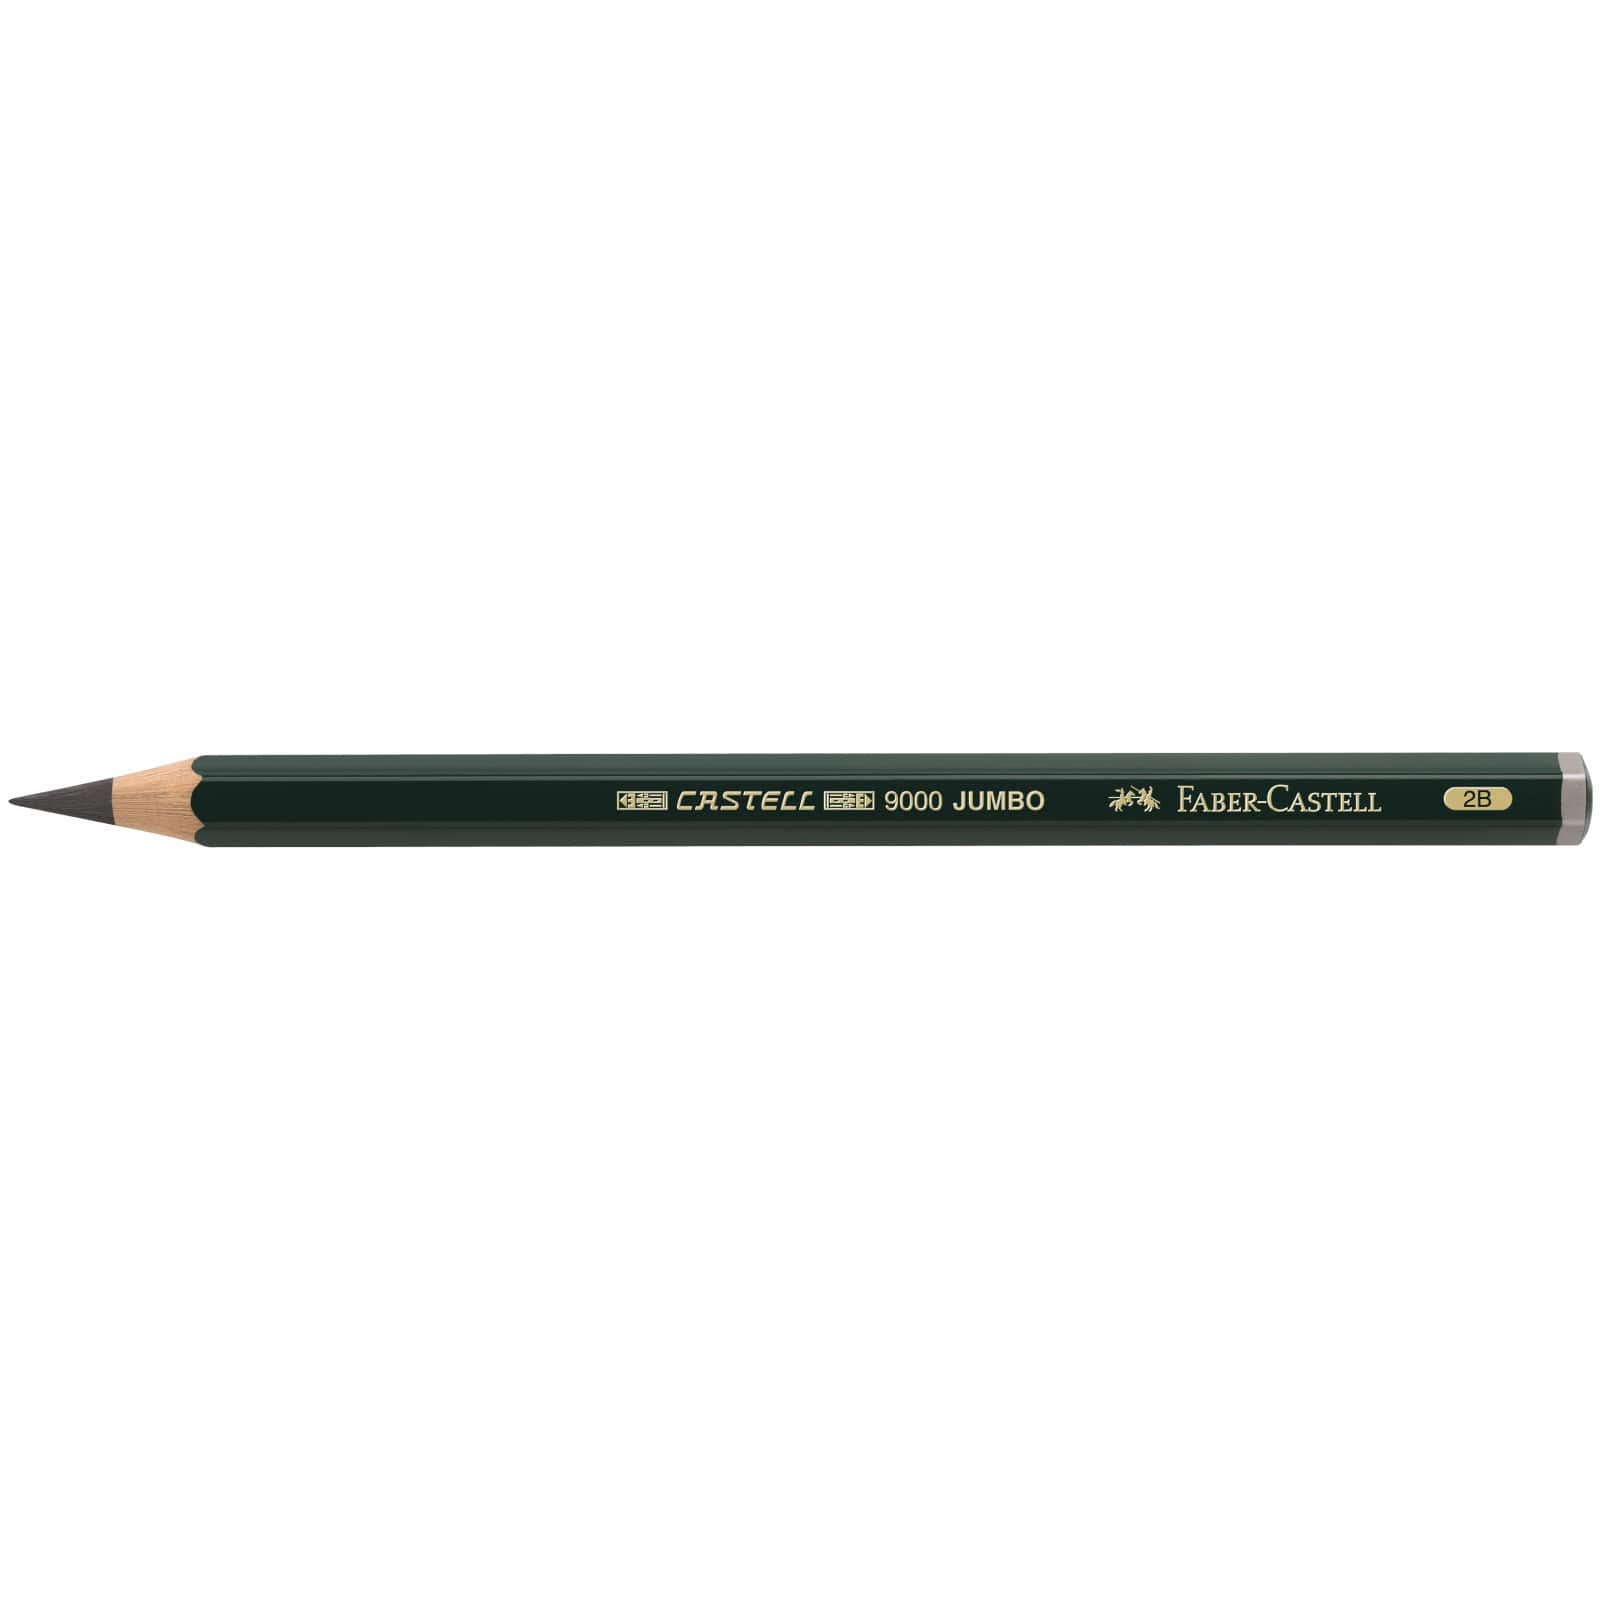 Faber-Castell 9000 Jumbo Graphite Pencil Sketch Set